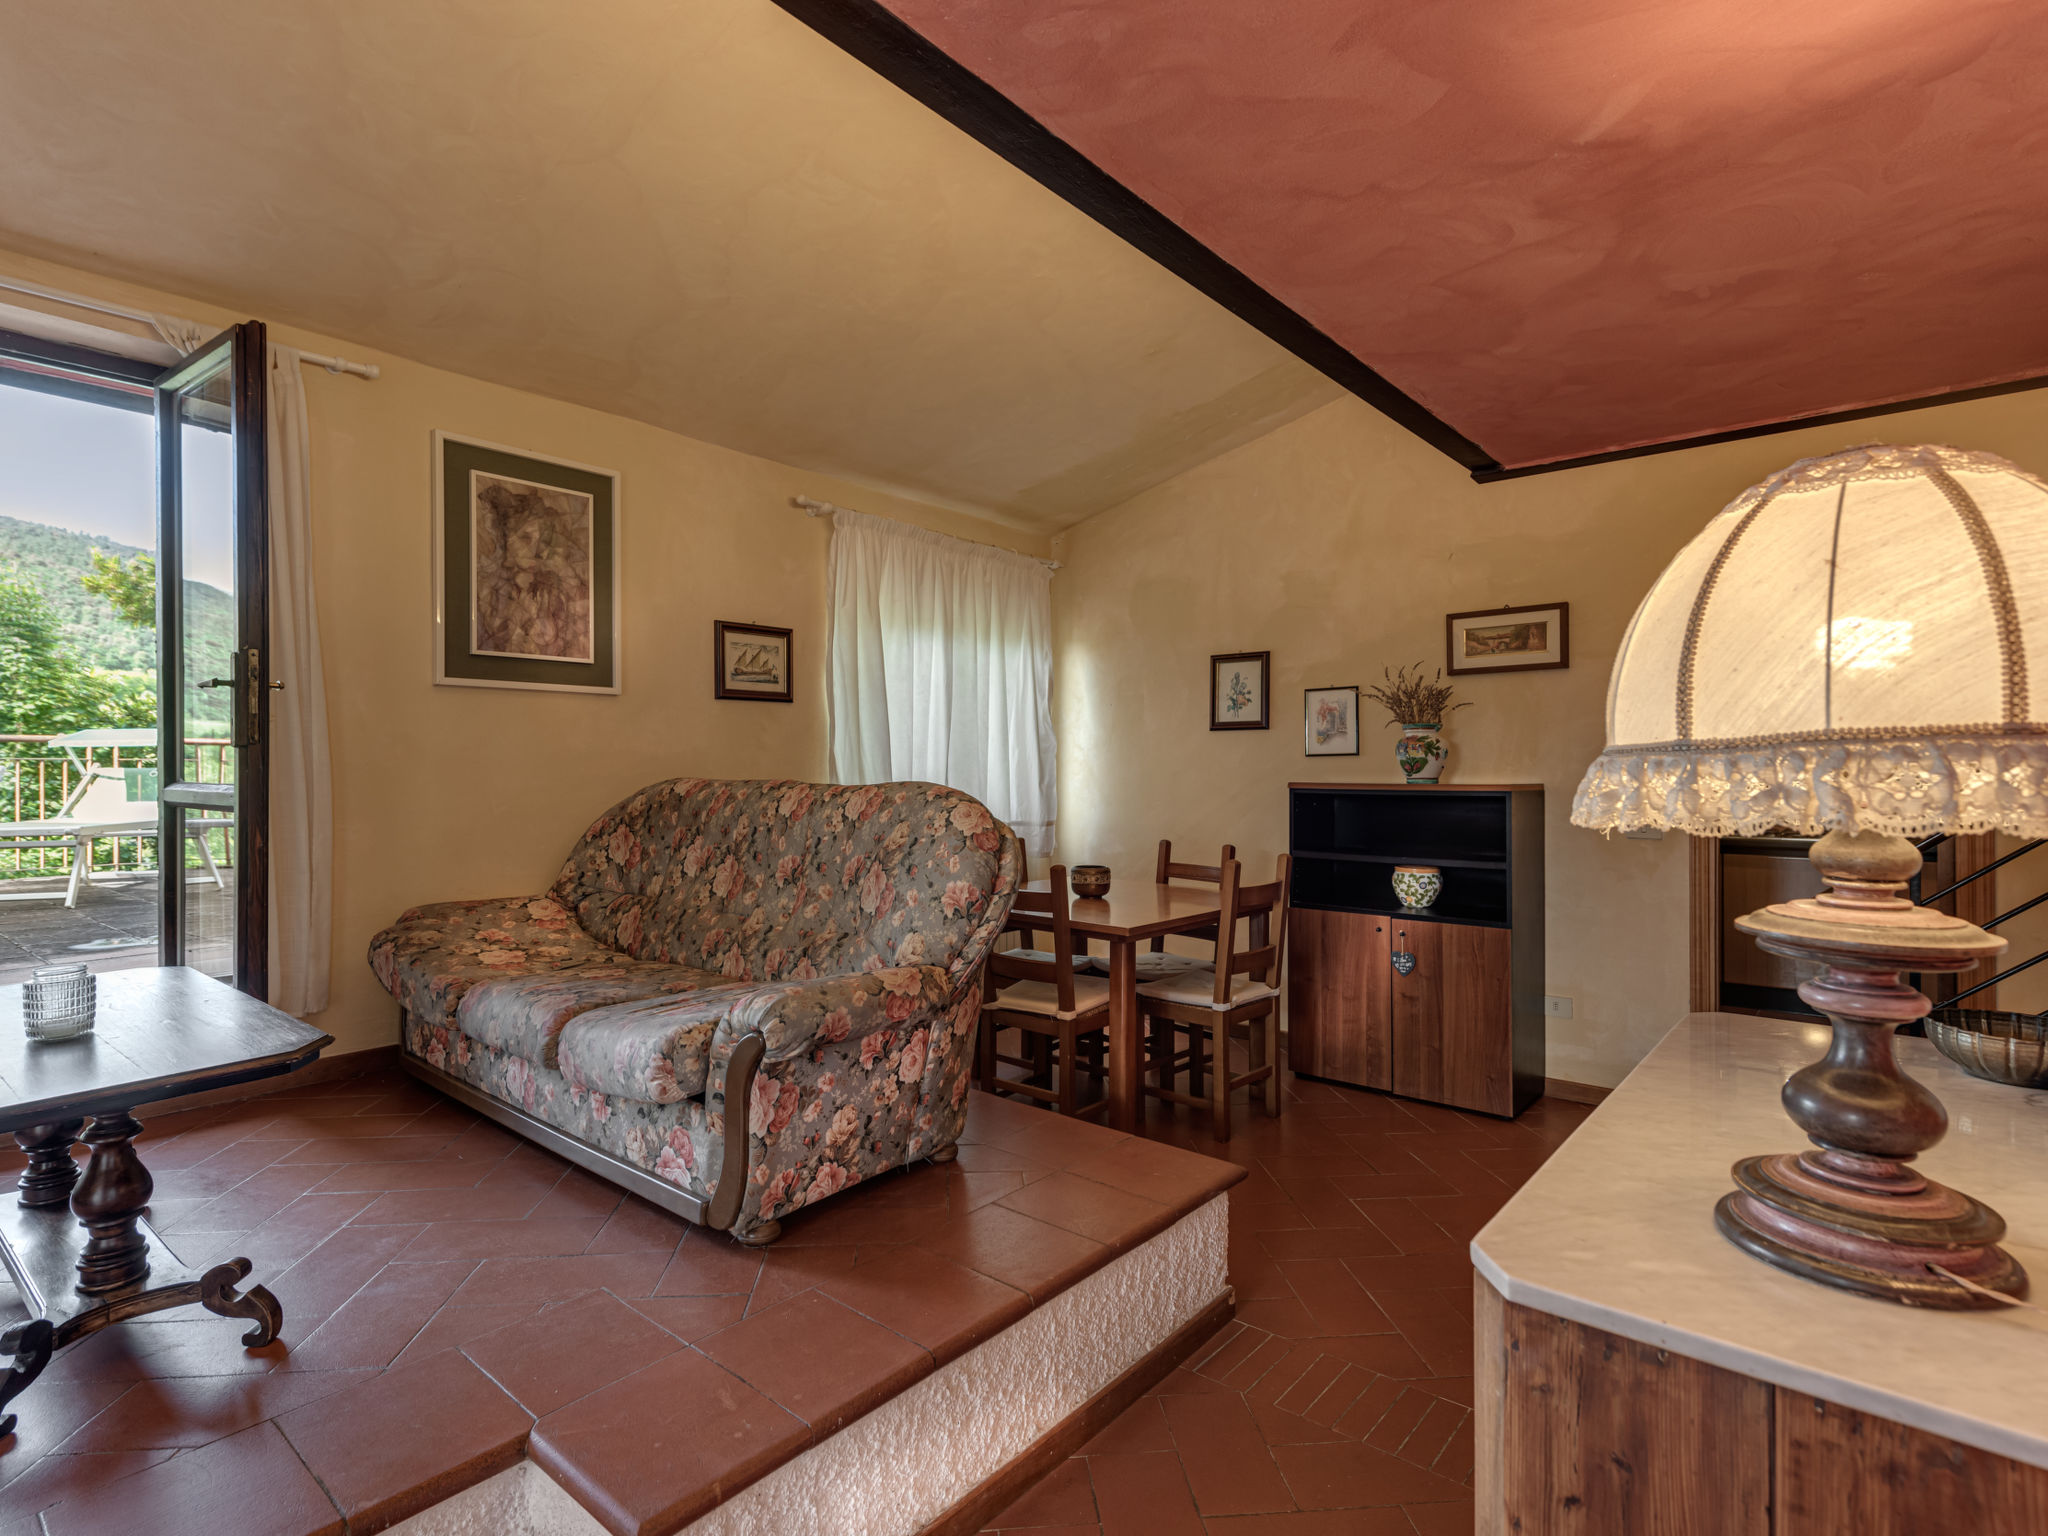 Foto 5 - Casa con 4 camere da letto a San Gimignano con piscina e giardino